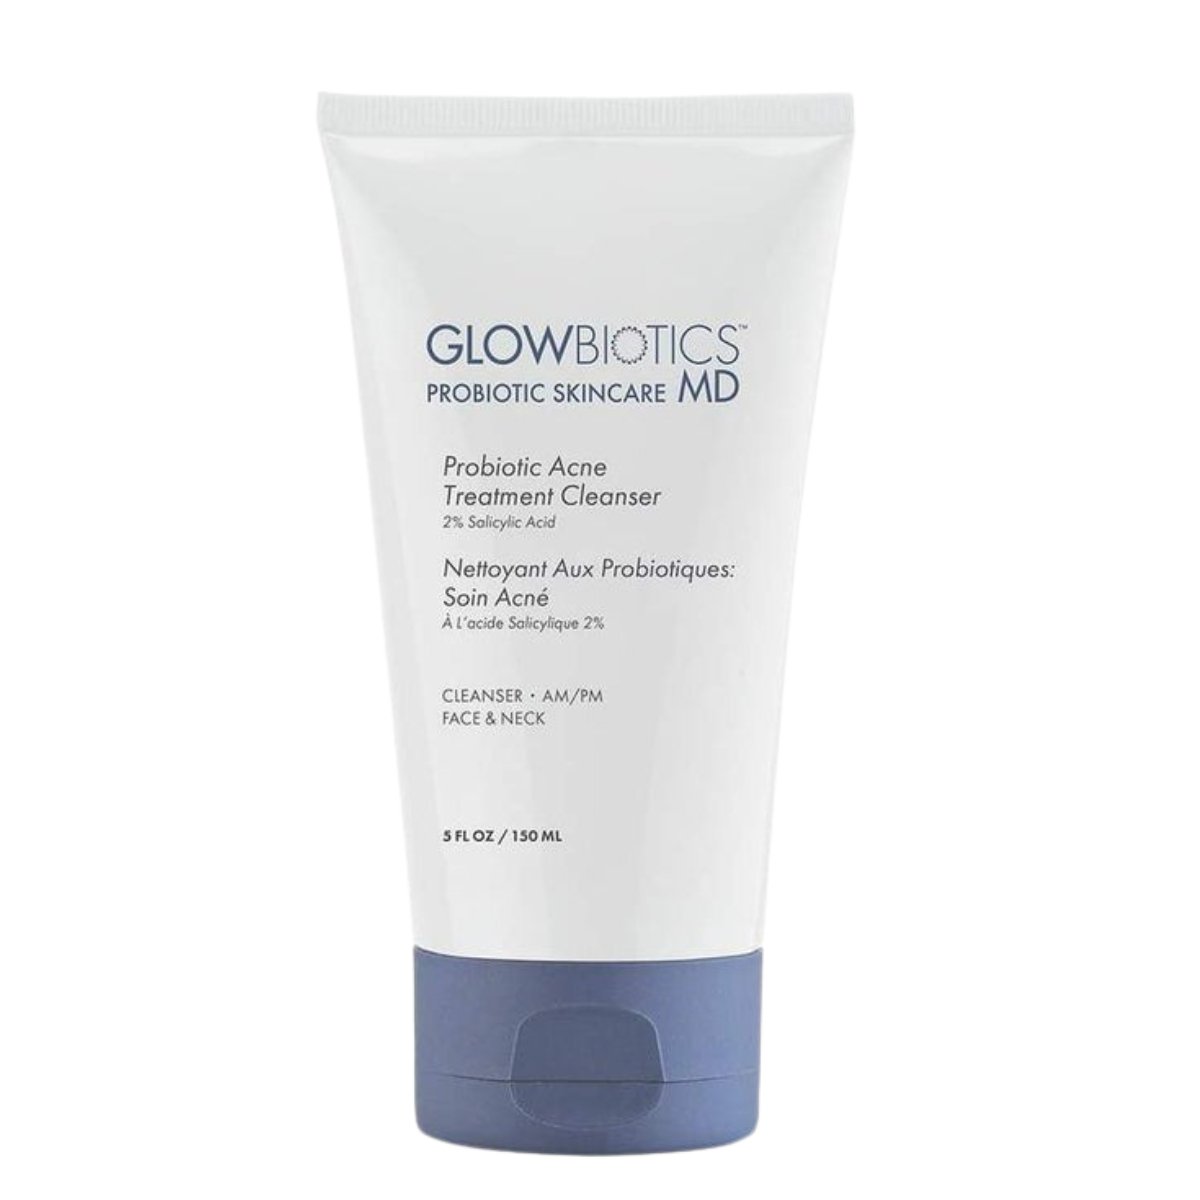 GLOWBIOTICS Probiotic Acne Treatment Cleanser (2% Salicylic Acid) - SkincareEssentials